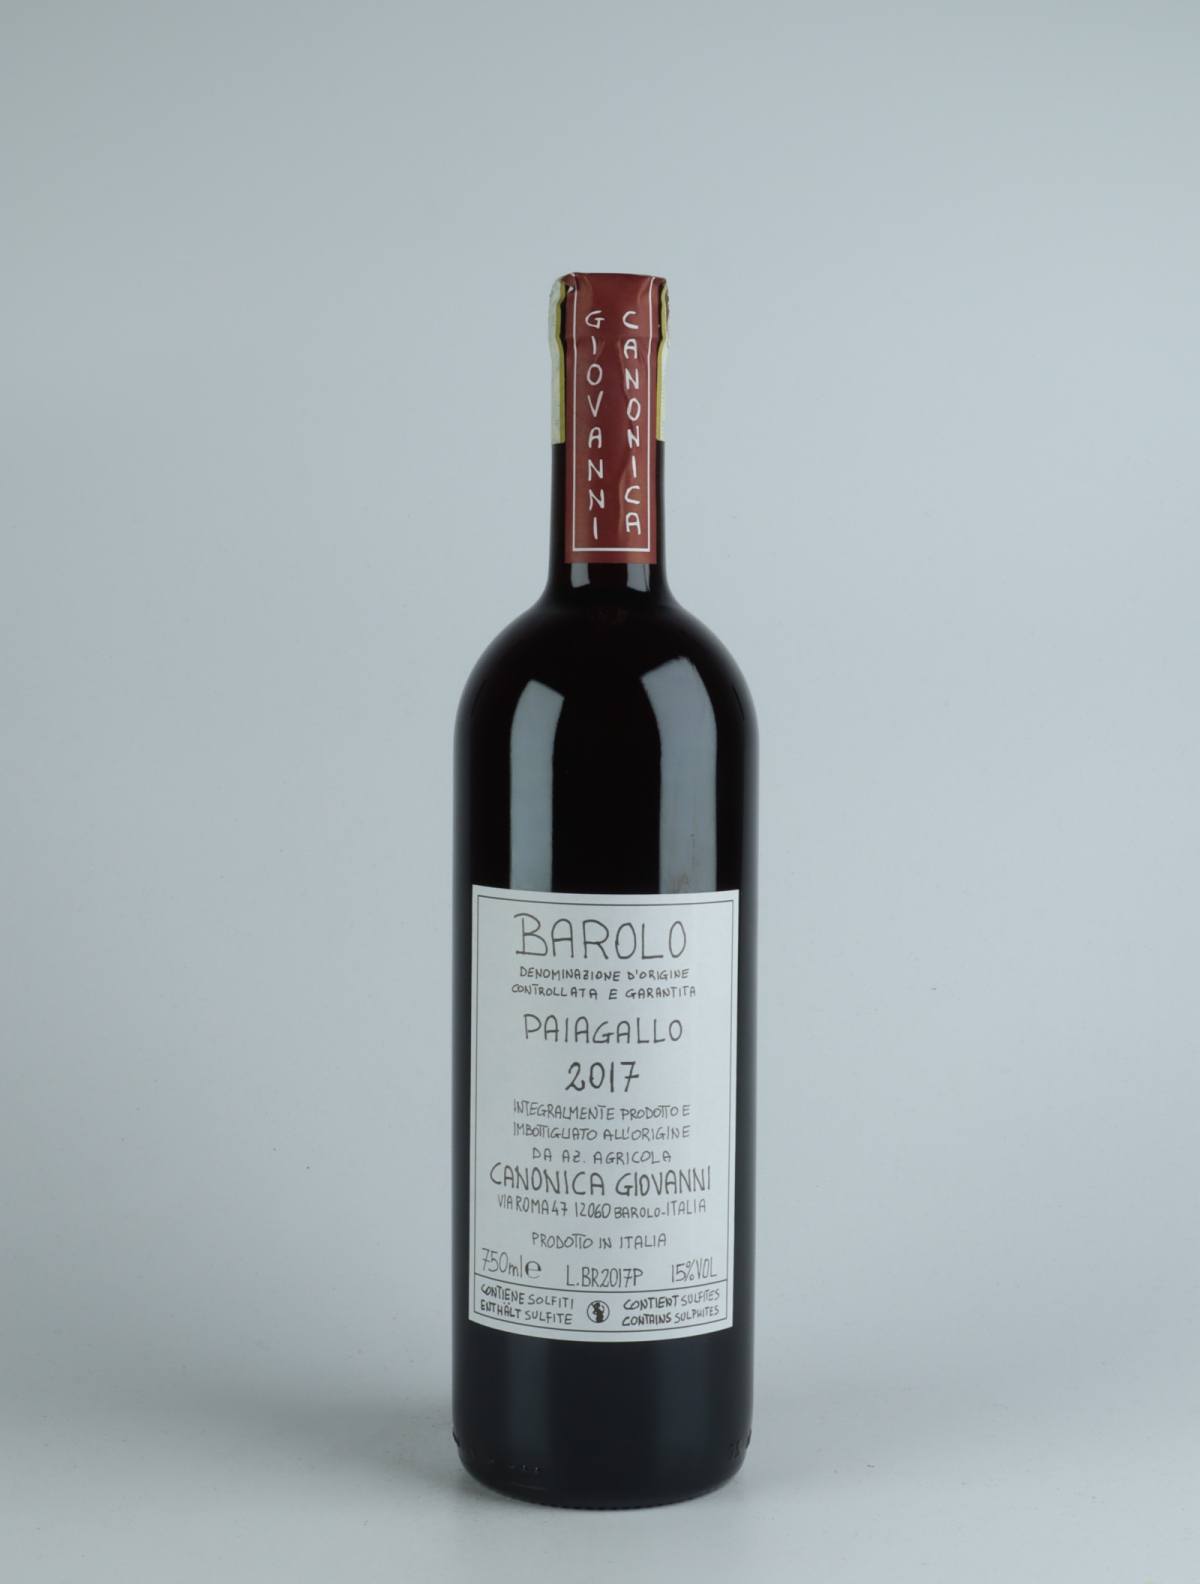 A bottle 2017 Barolo - Paiagallo Red wine from Giovanni Canonica, Piedmont in Italy